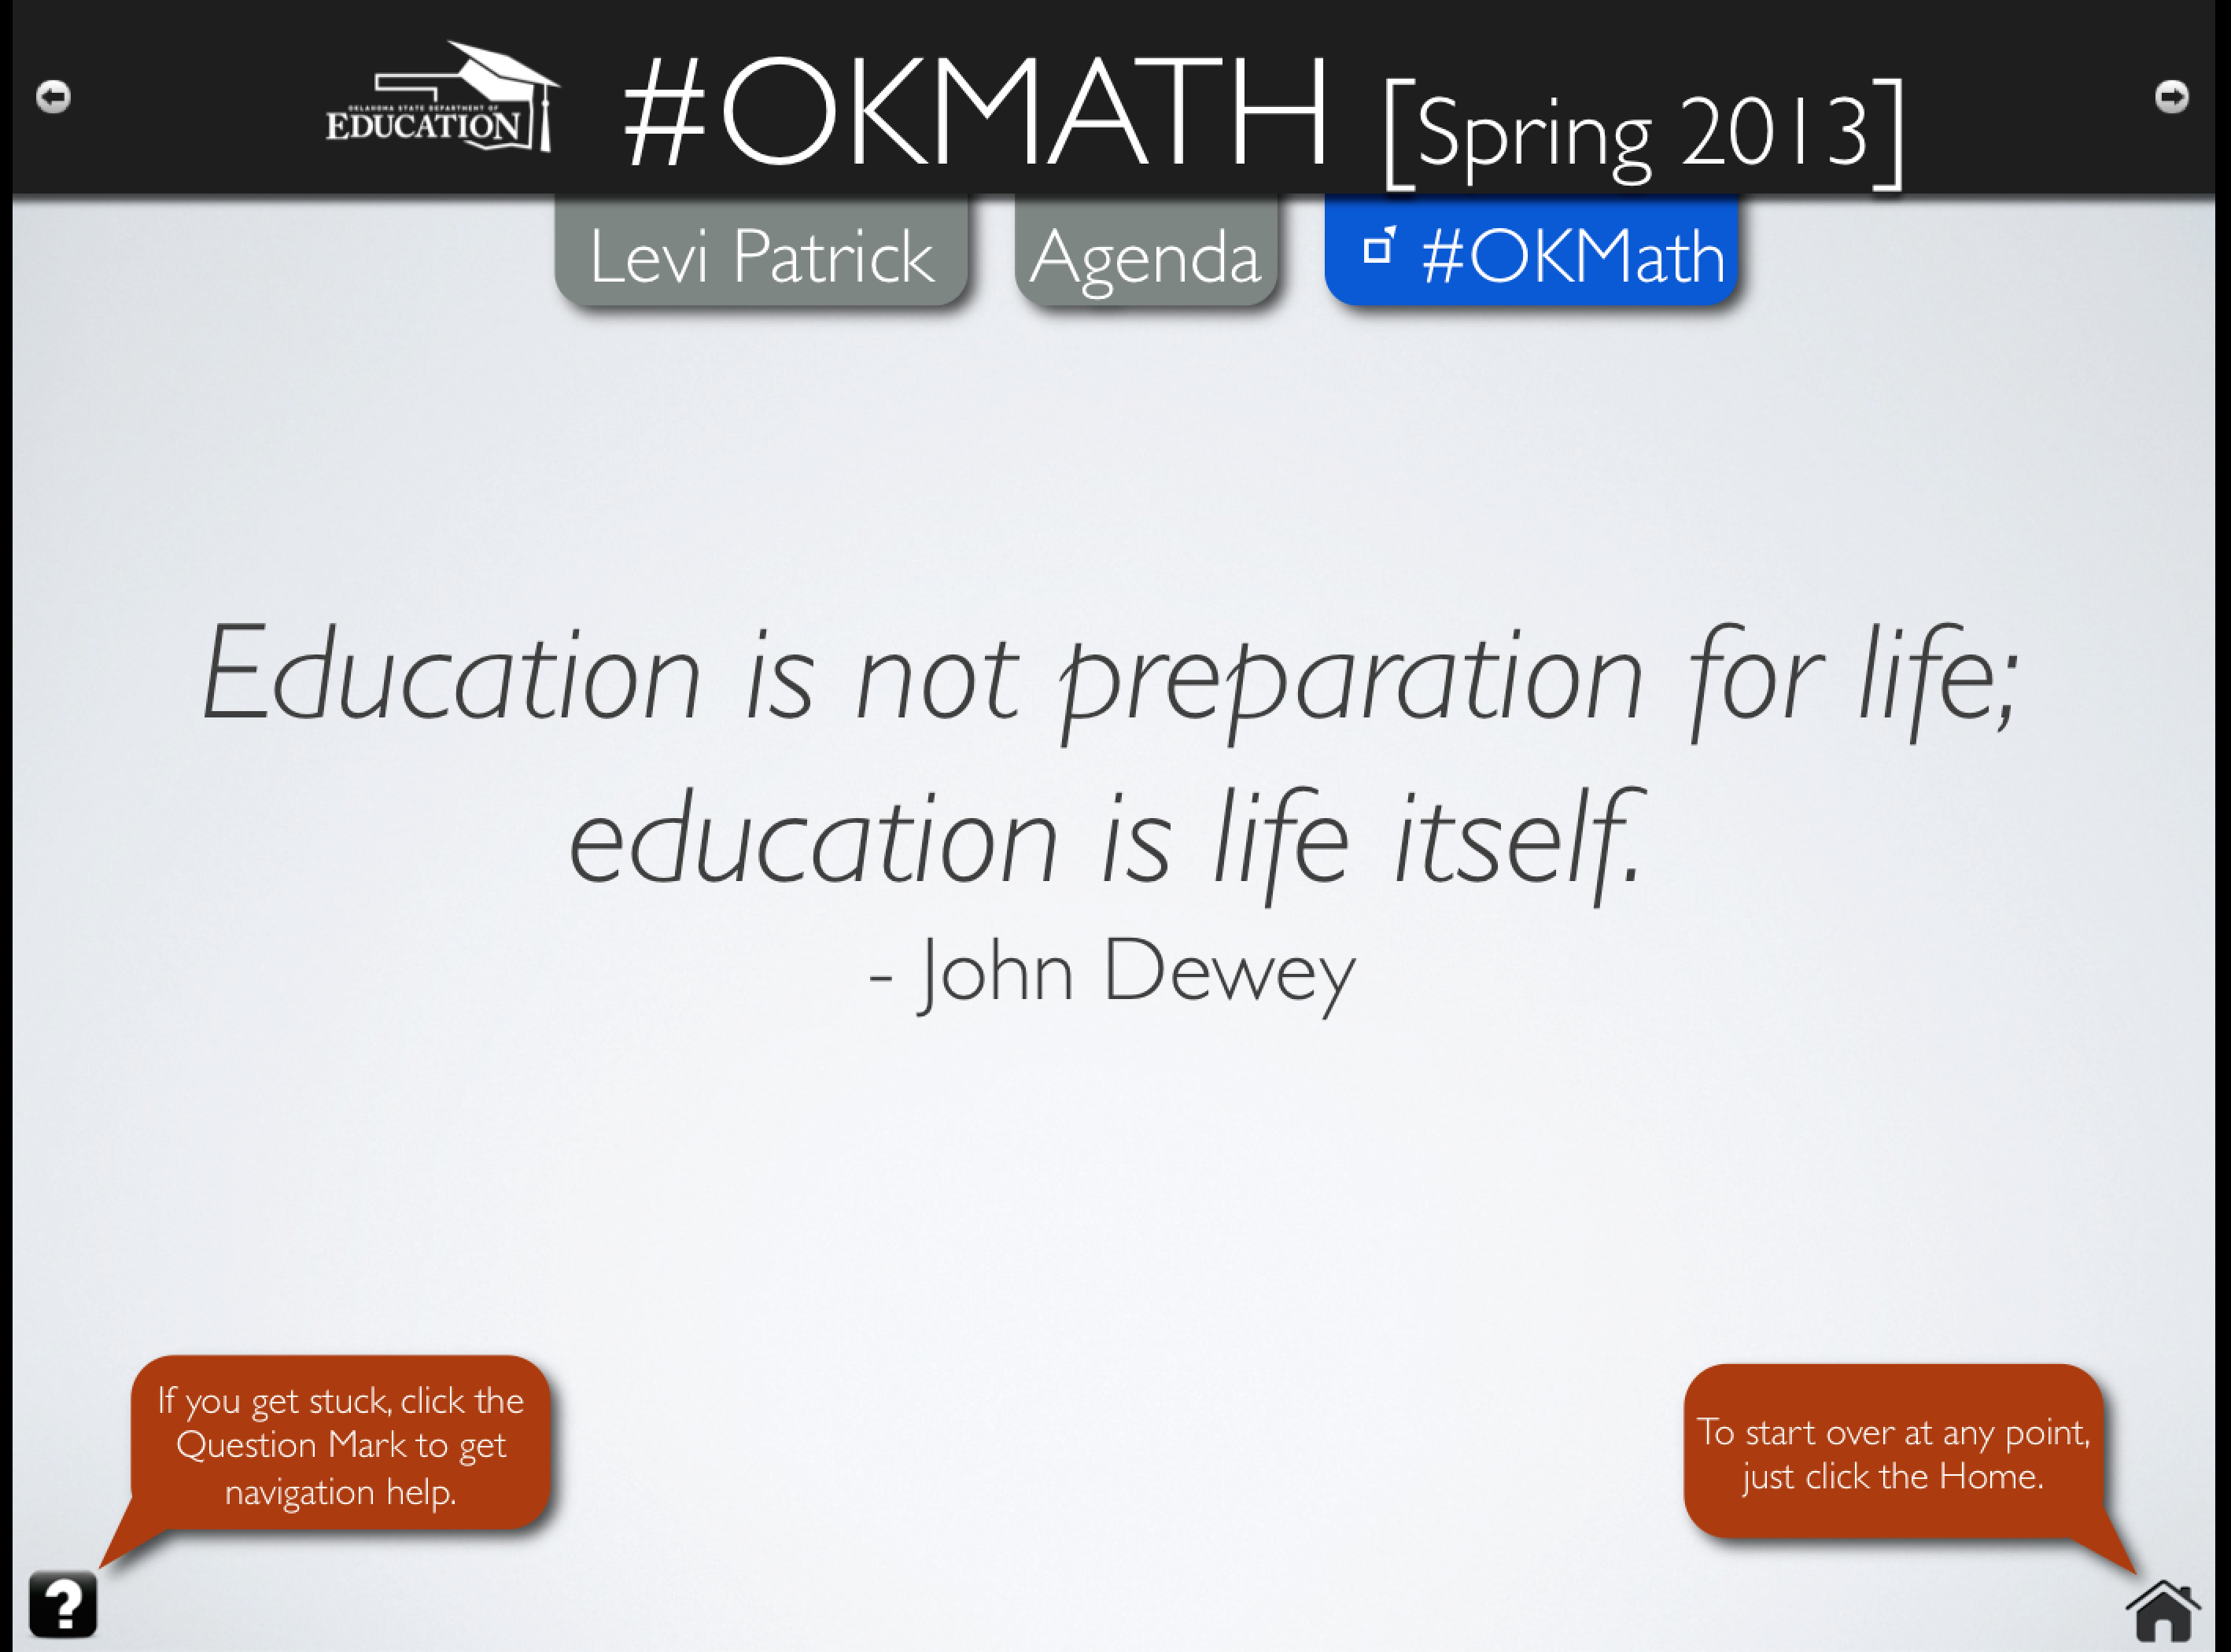 ARCHIVE: OKMath Spring 2013 Presentation